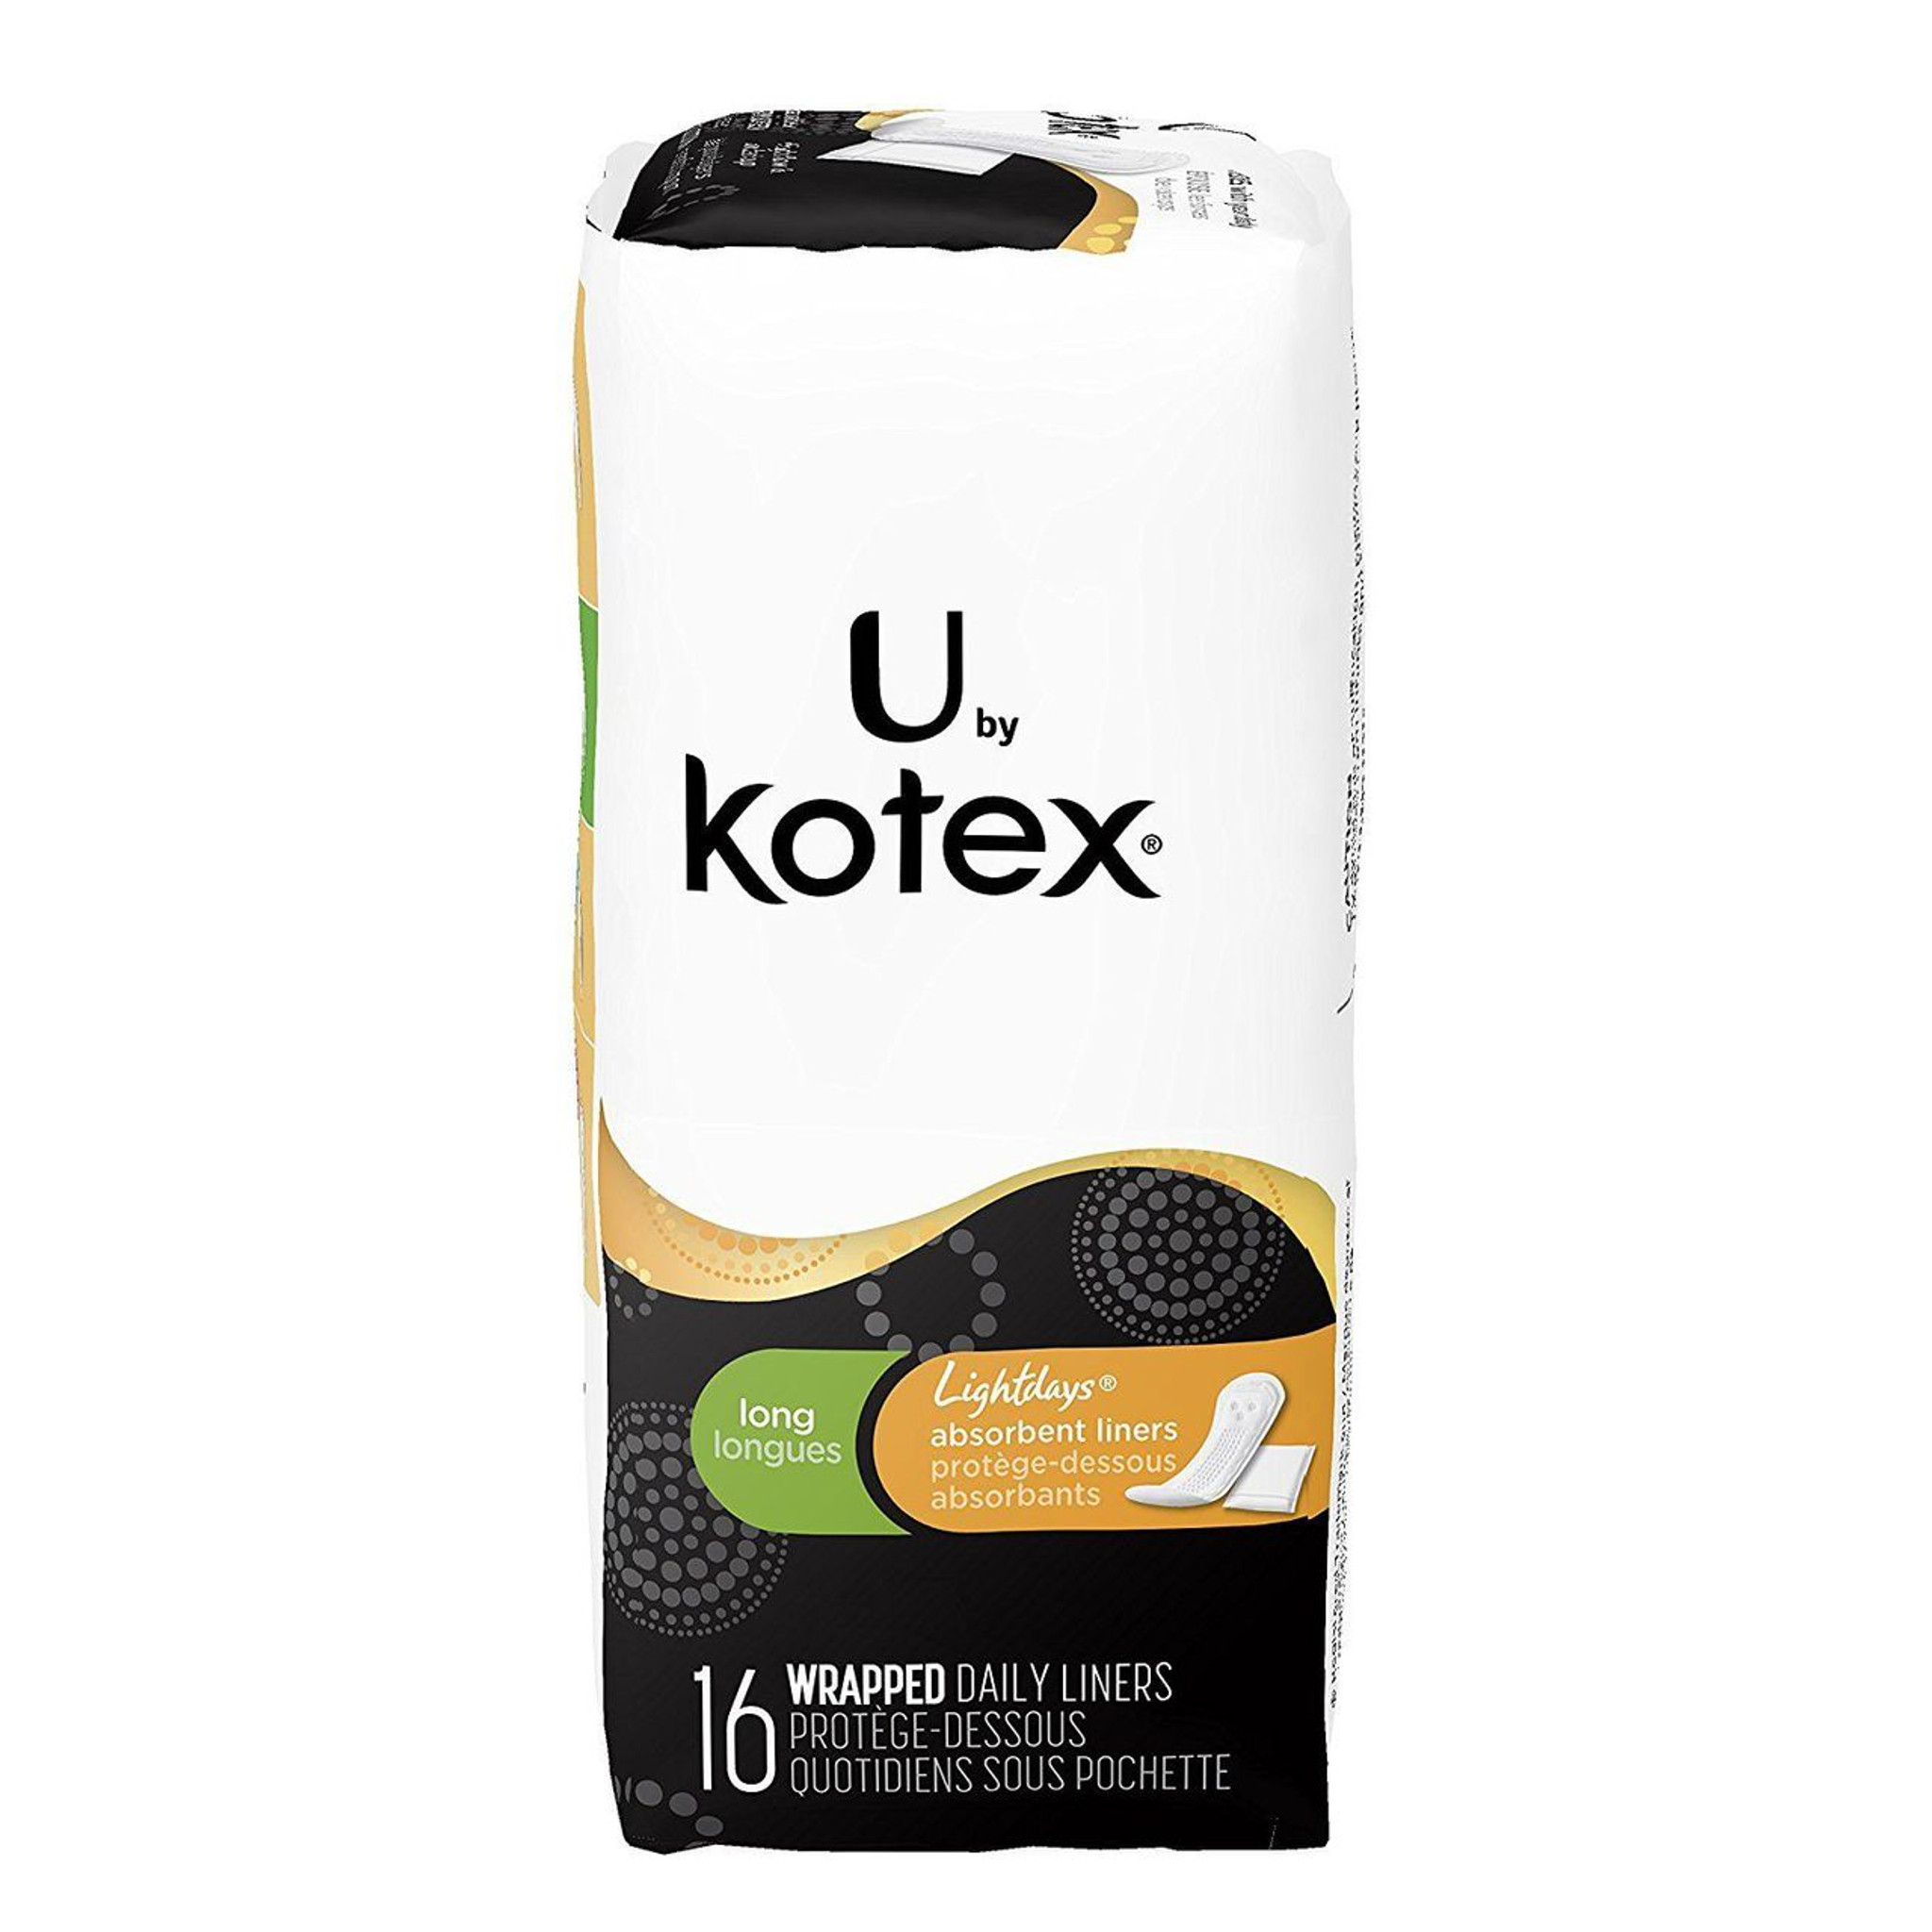 Kotex® Cotton Liners - Kotex SG